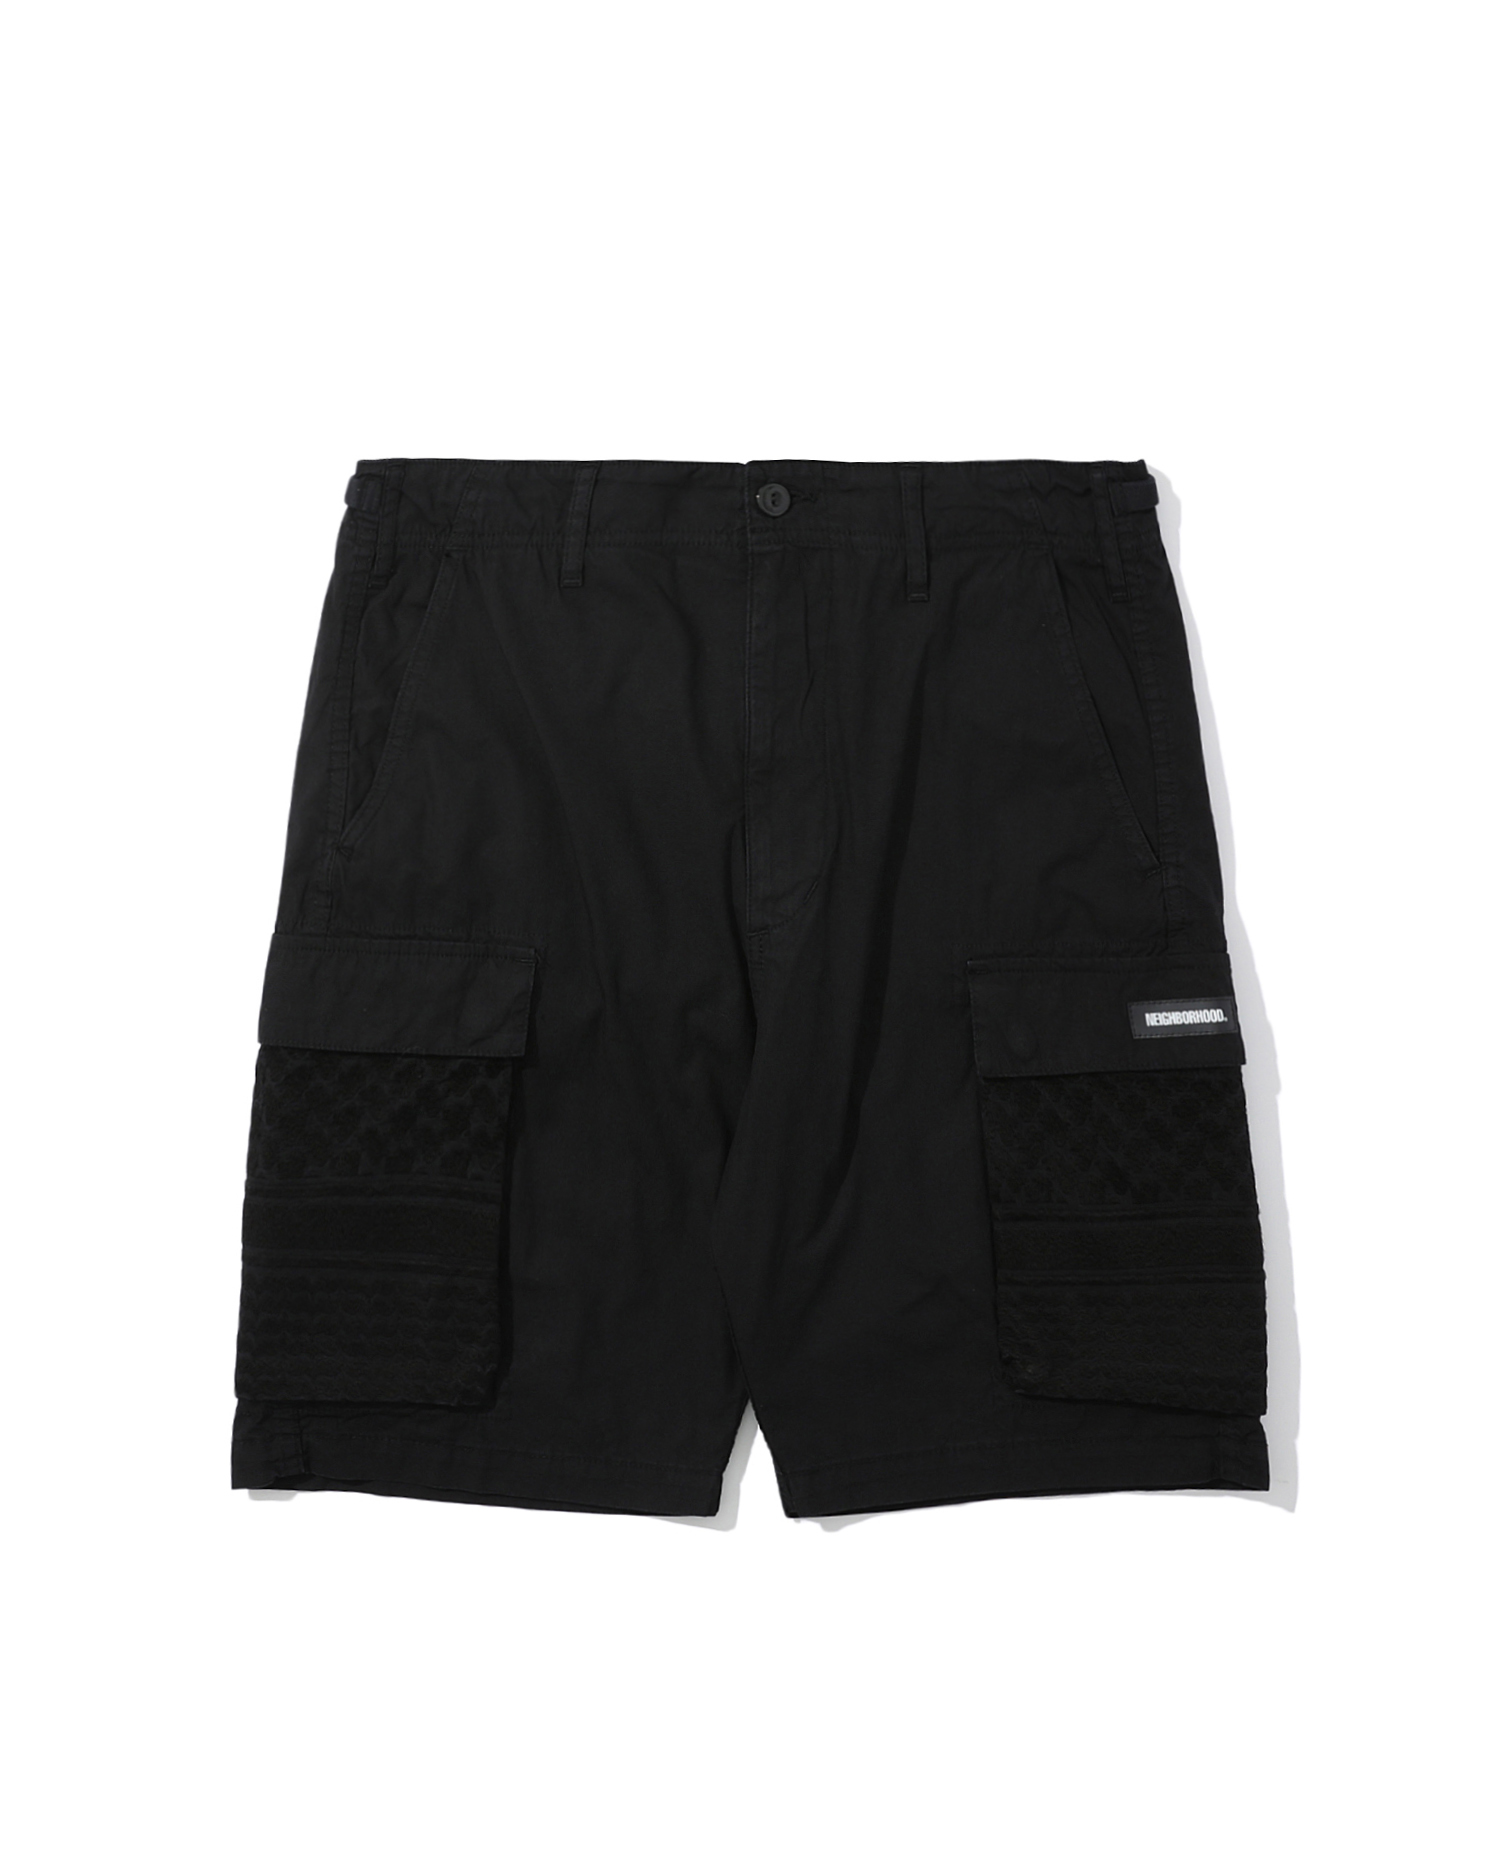 BDU cargo shorts